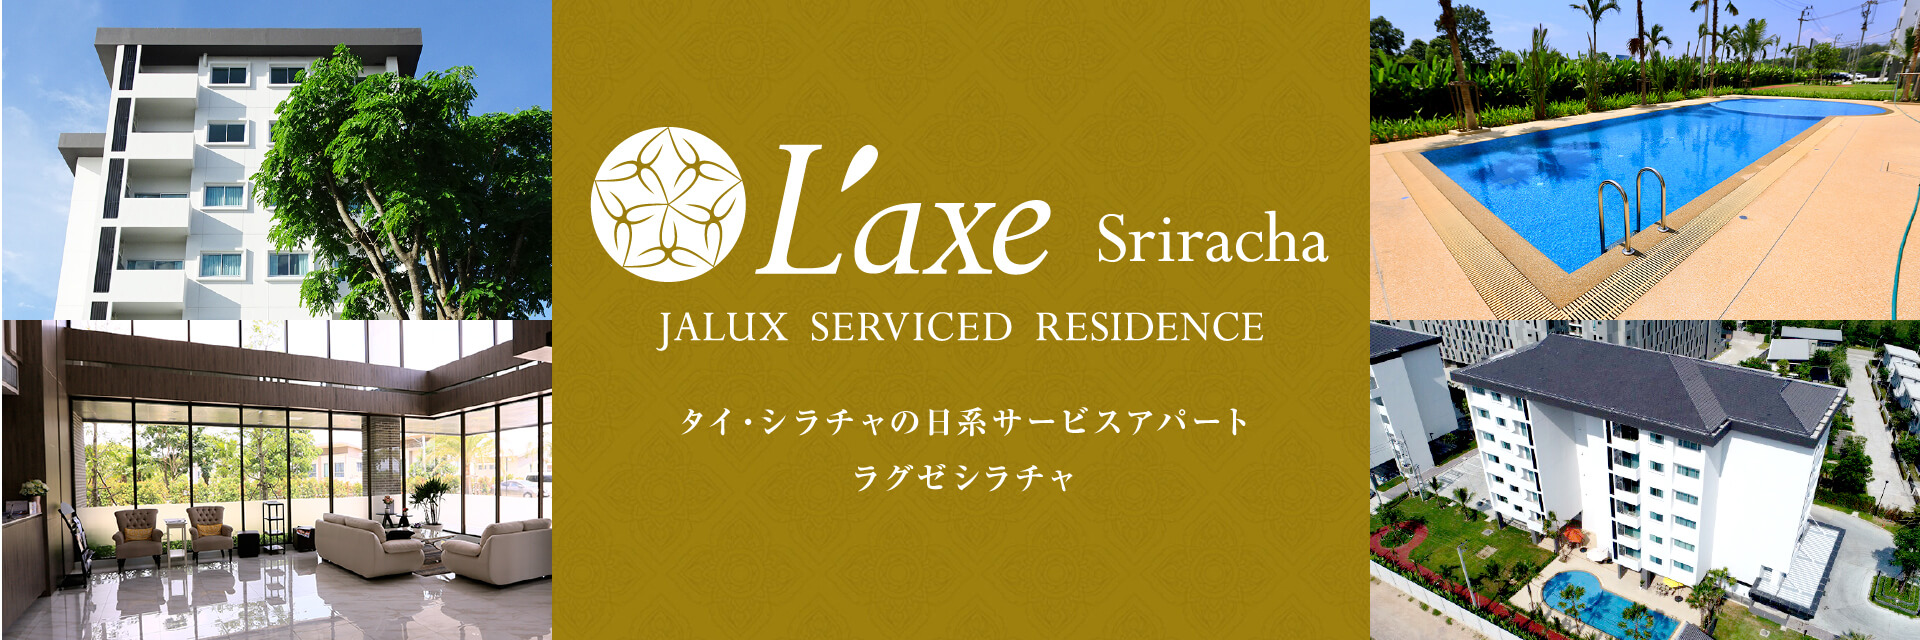 JALUX SERVICED RESIDENCE タイ・シラチャの日系サービスアパートラグゼシラチャ